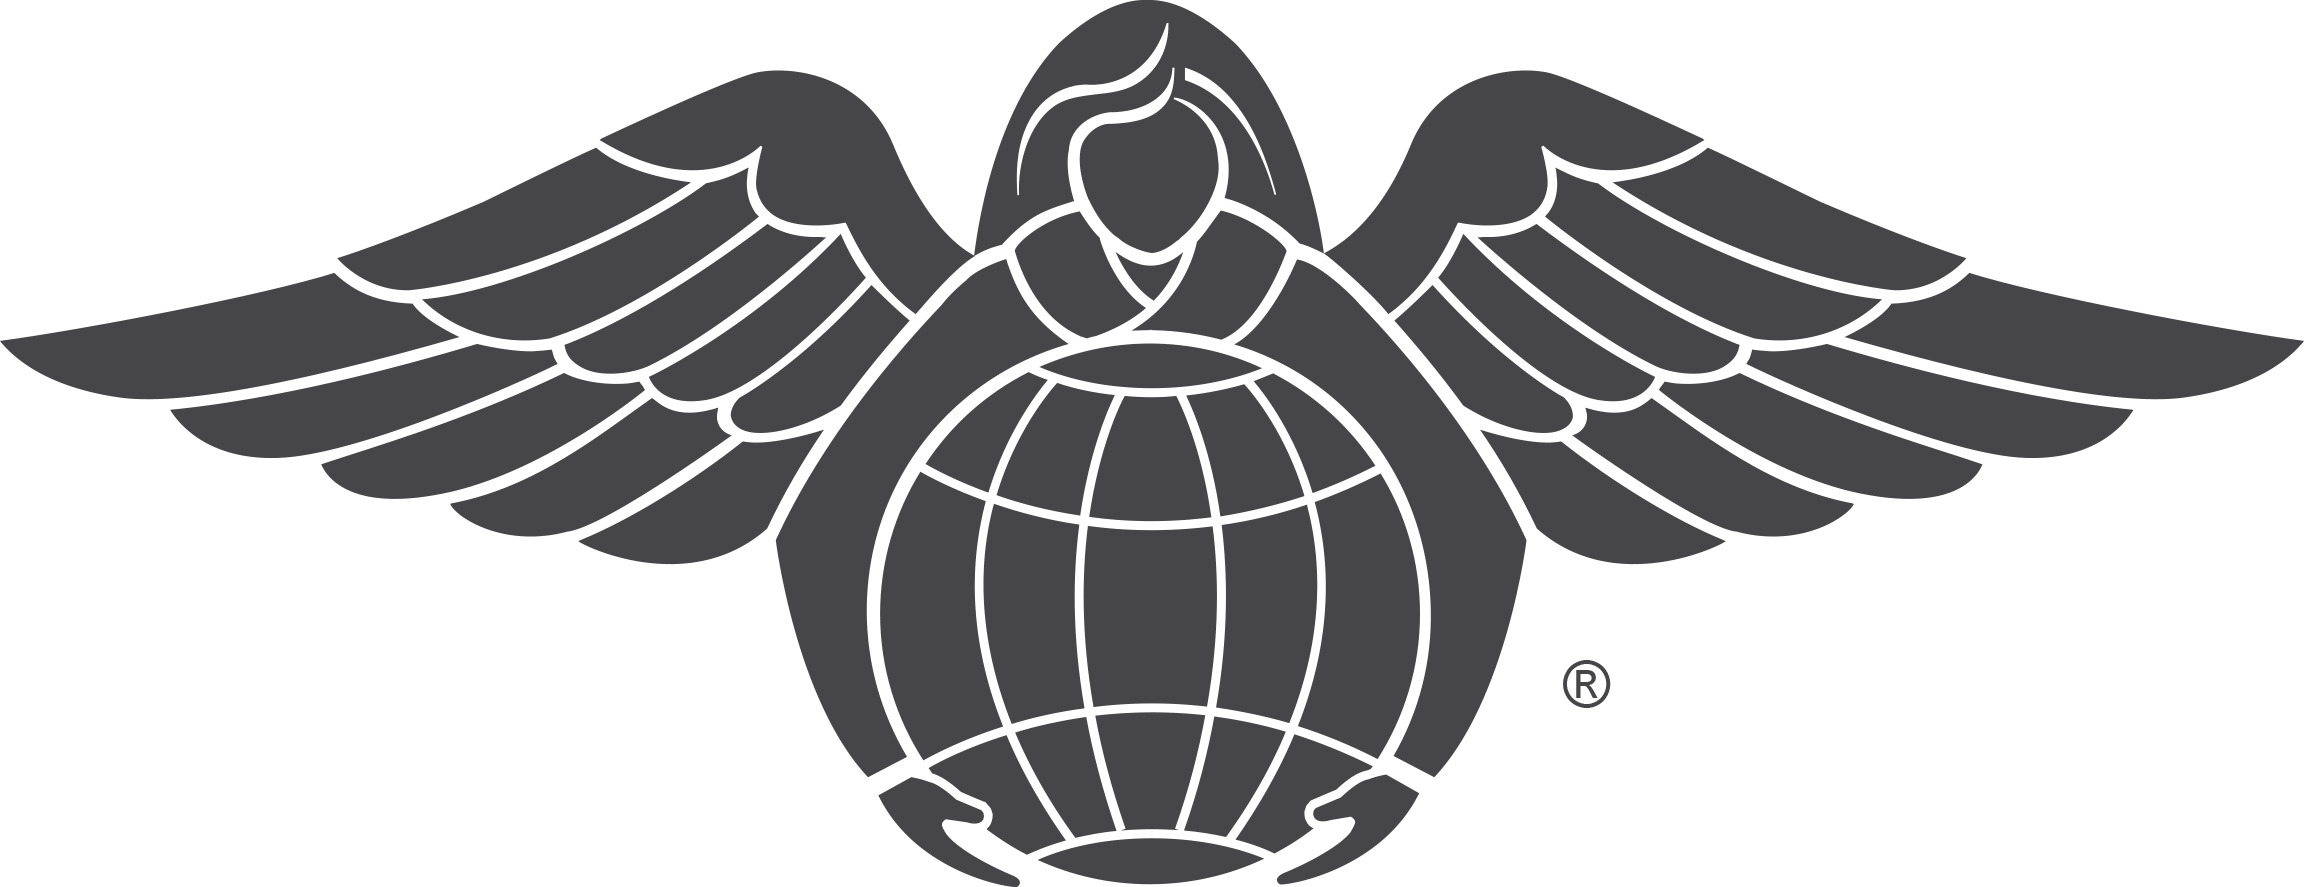 Small Angels Logo - Angel of Mercy Logo | USAF PARARESCUE